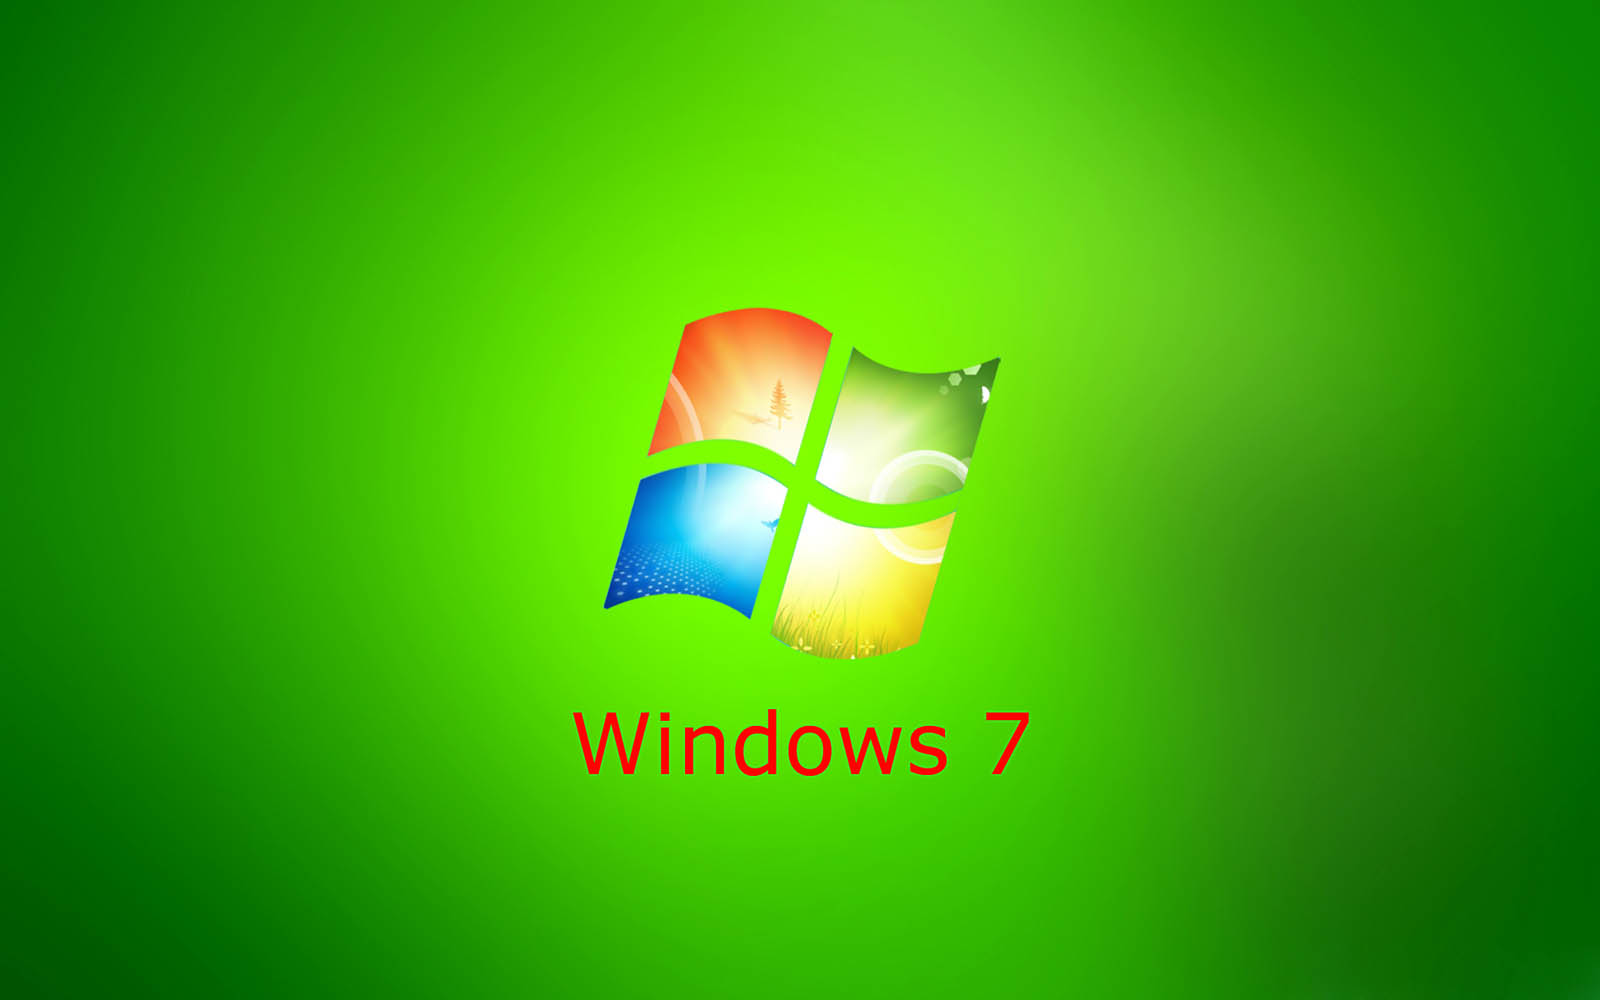 sfondi windows 7,verde,leggero,sistema operativo,bandiera,grafica